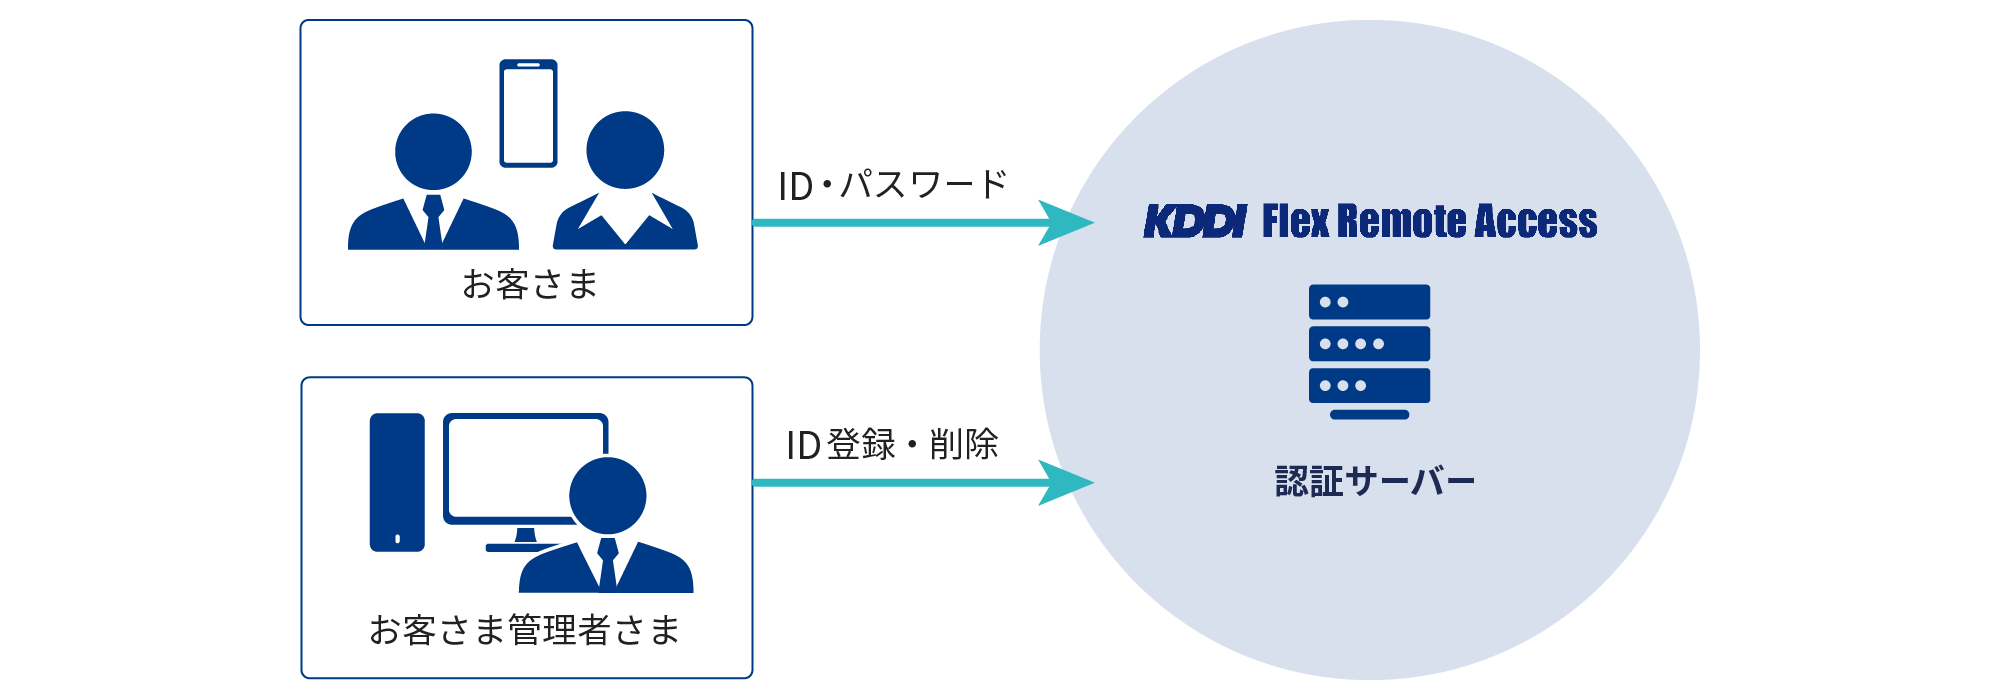 IDとパスワードでKDDIの認証サーバーを利用でき、管理者さまでIDの登録・削除が可能